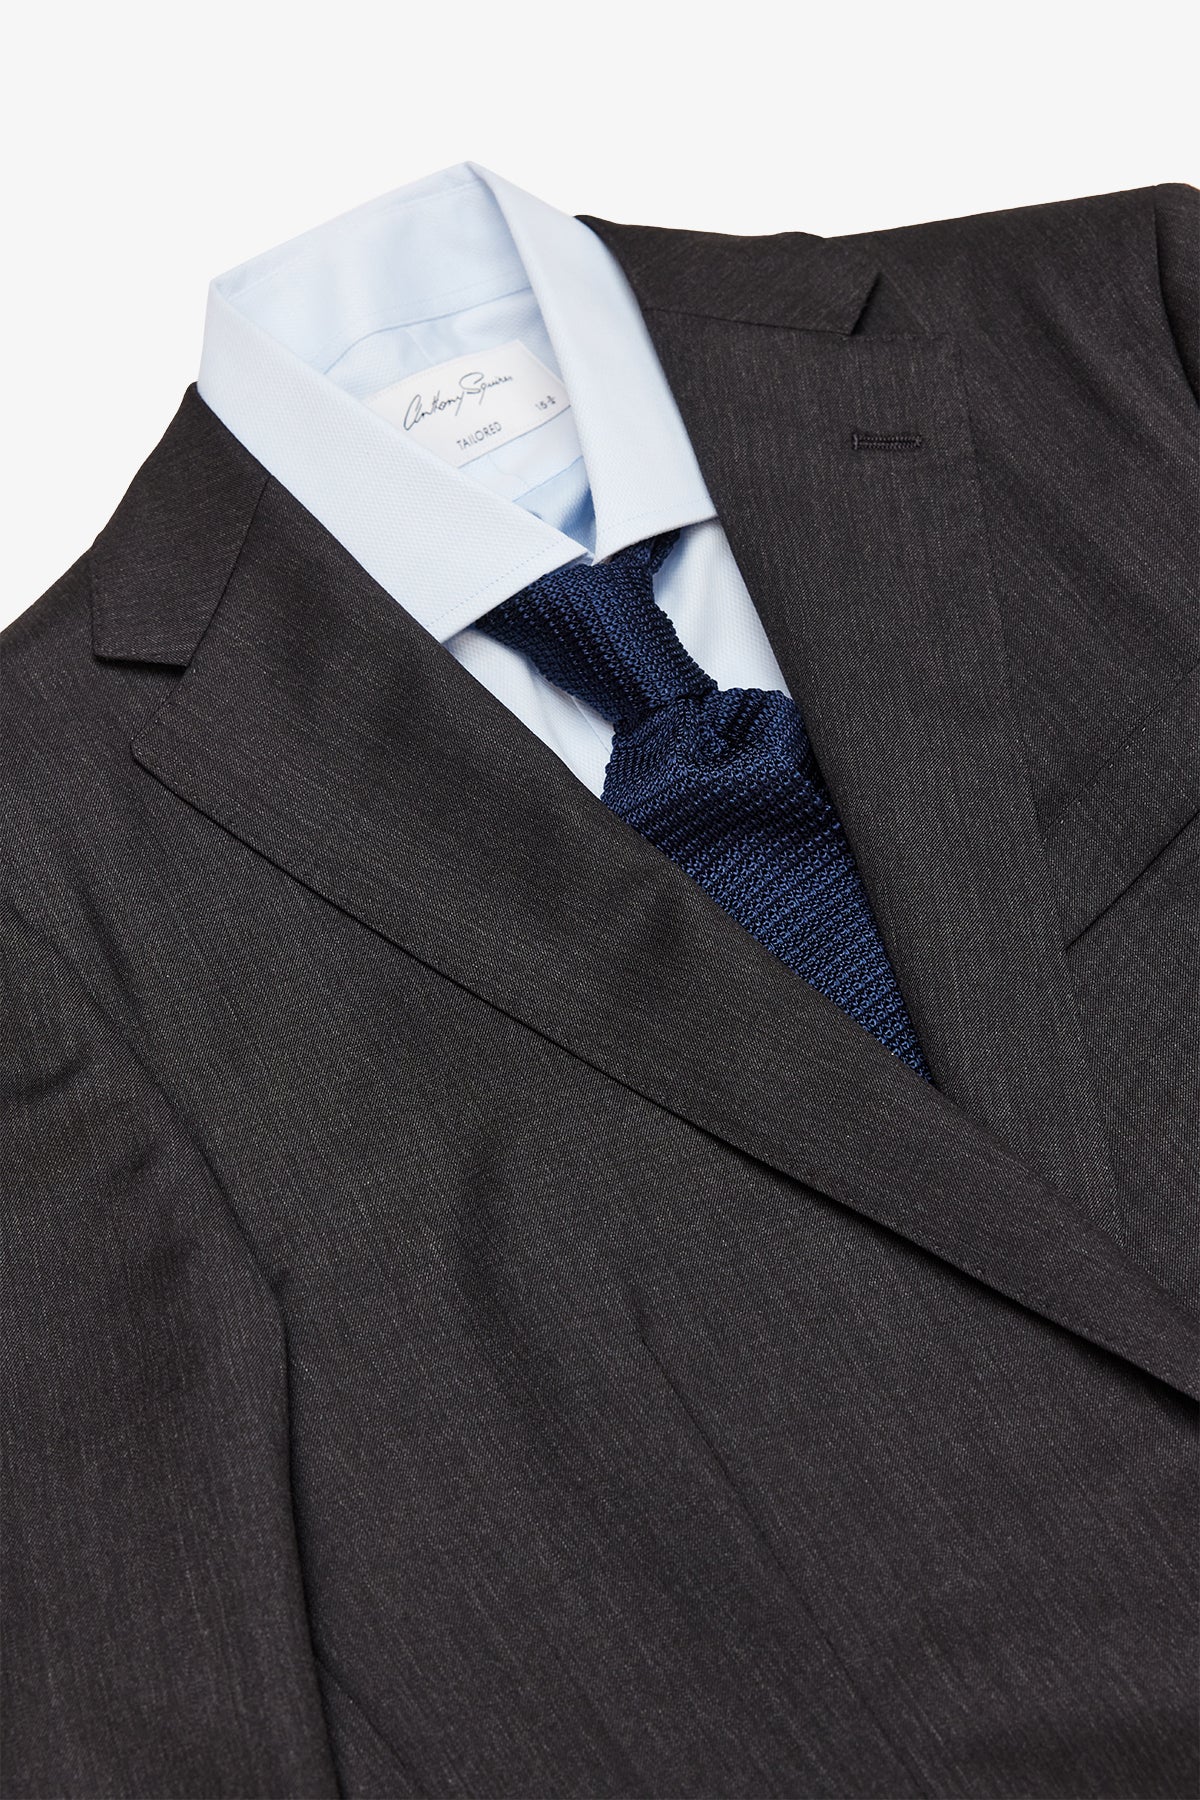 Ives - Charcoal Suit